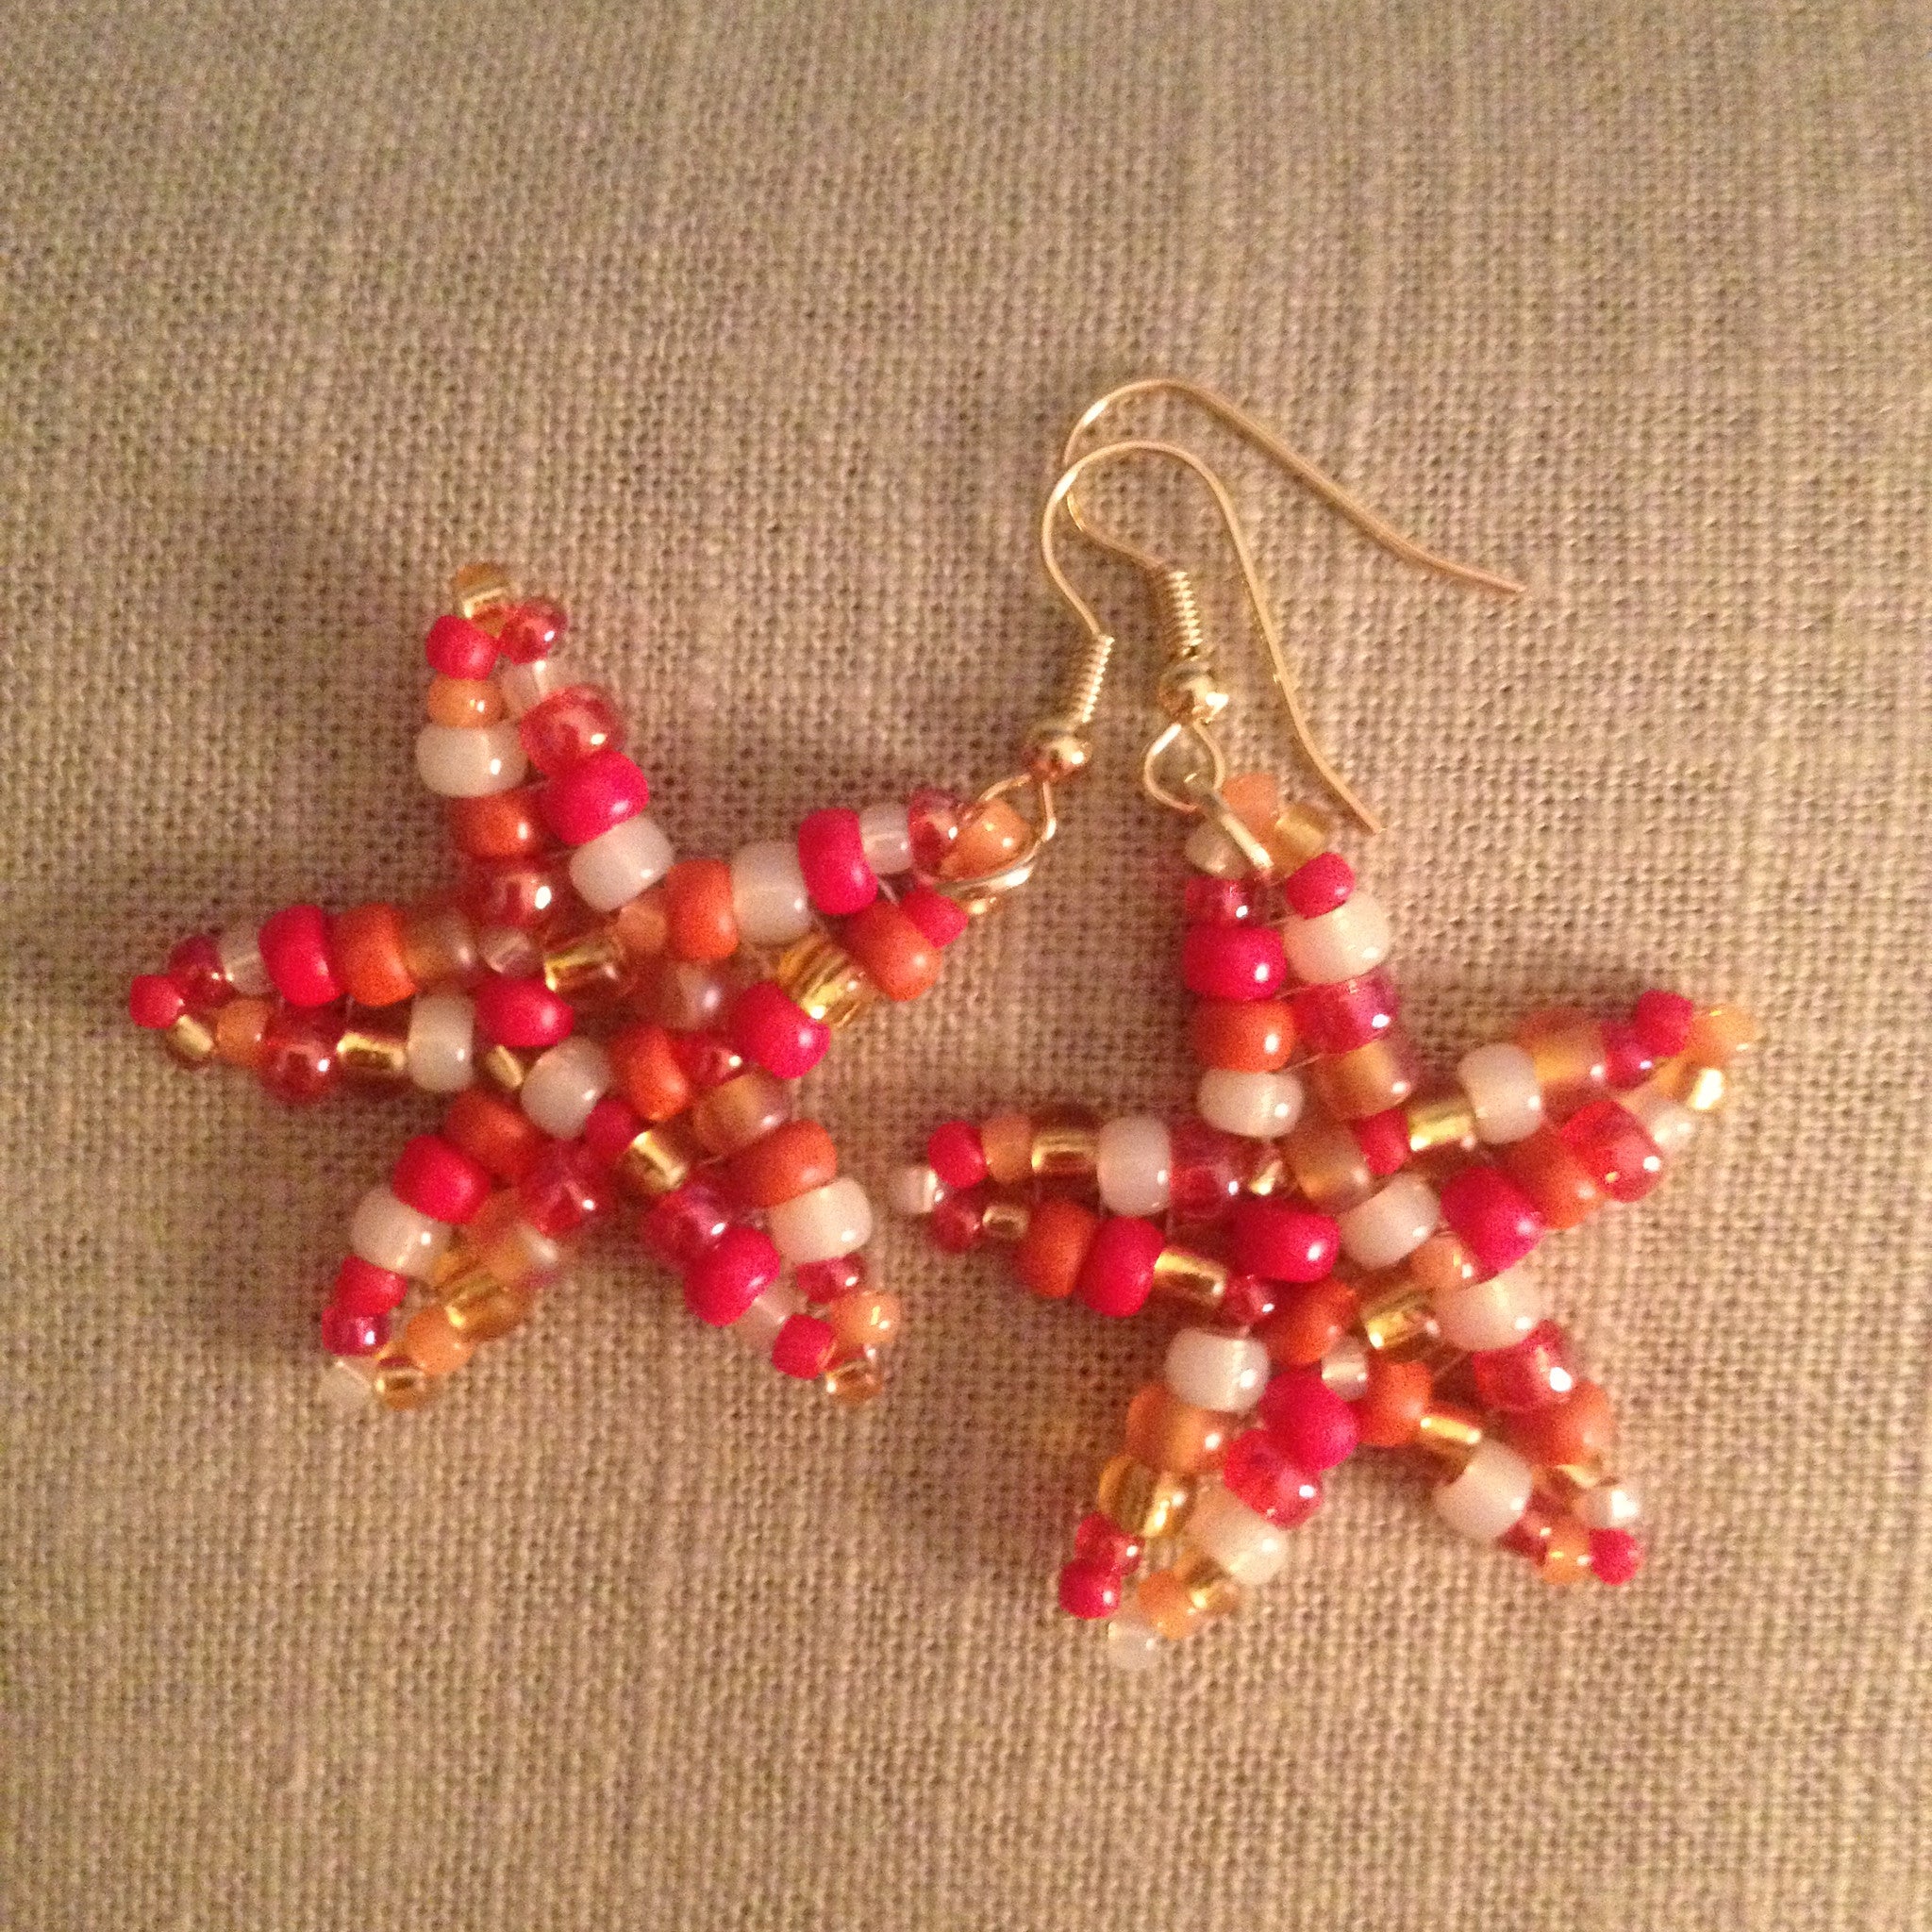 Starfish beaded handmade earrings resort cruise wear beachy fun style casual